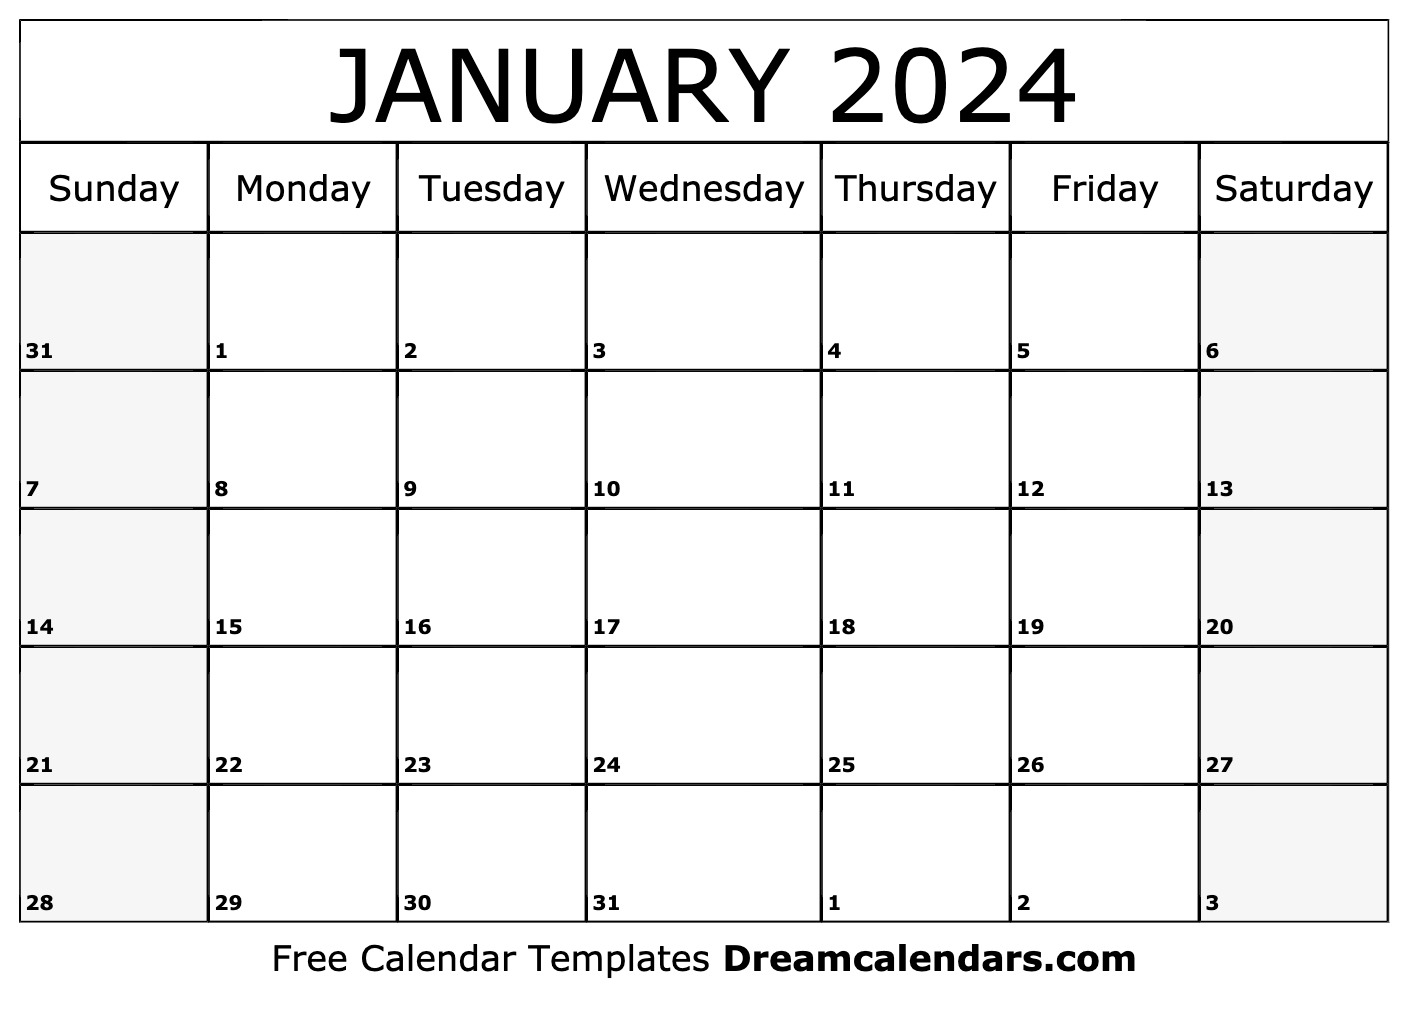 January 2024 Calendar | Free Blank Printable With Holidays for Printable January 2024 Calendar Wiki